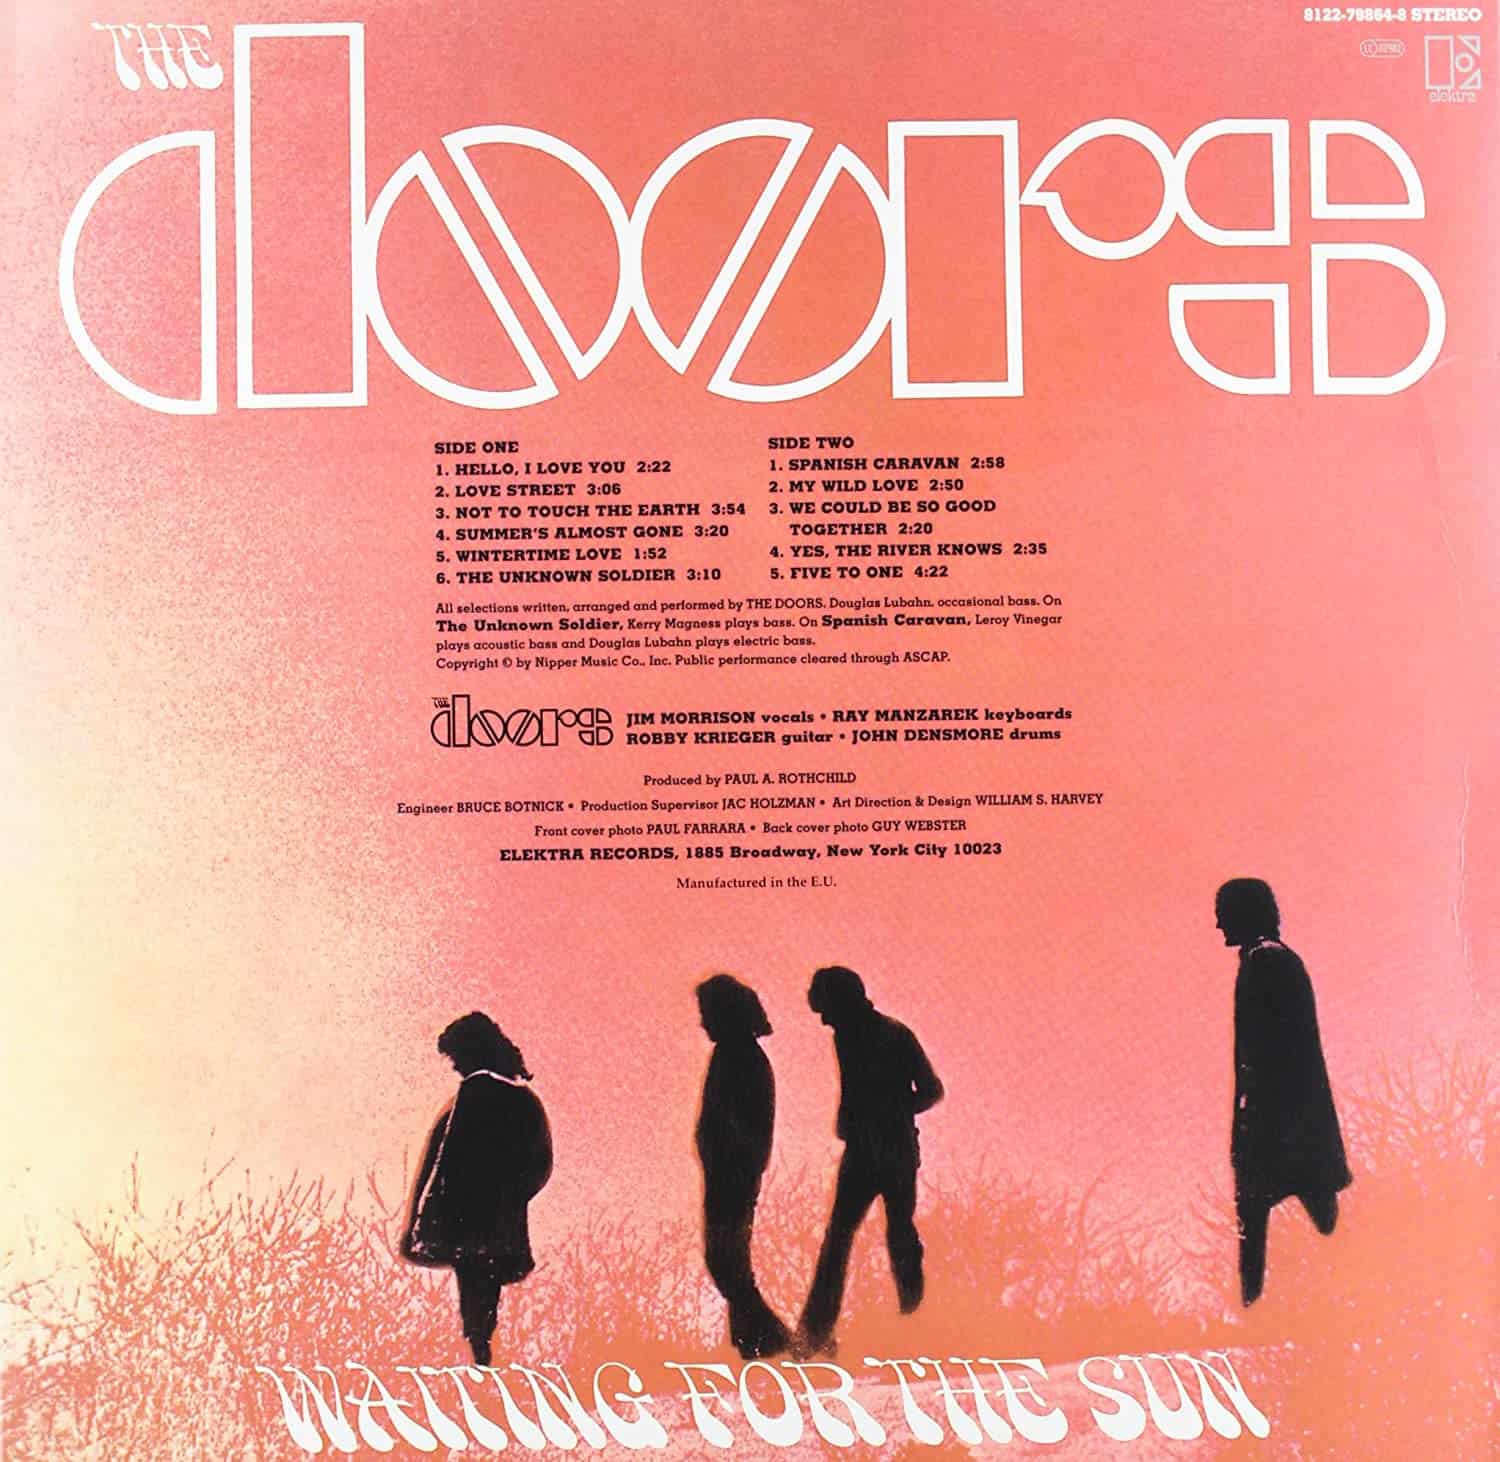 The-Doors-Waiting-for-the-Sun-vinyl-lp-record-album-back